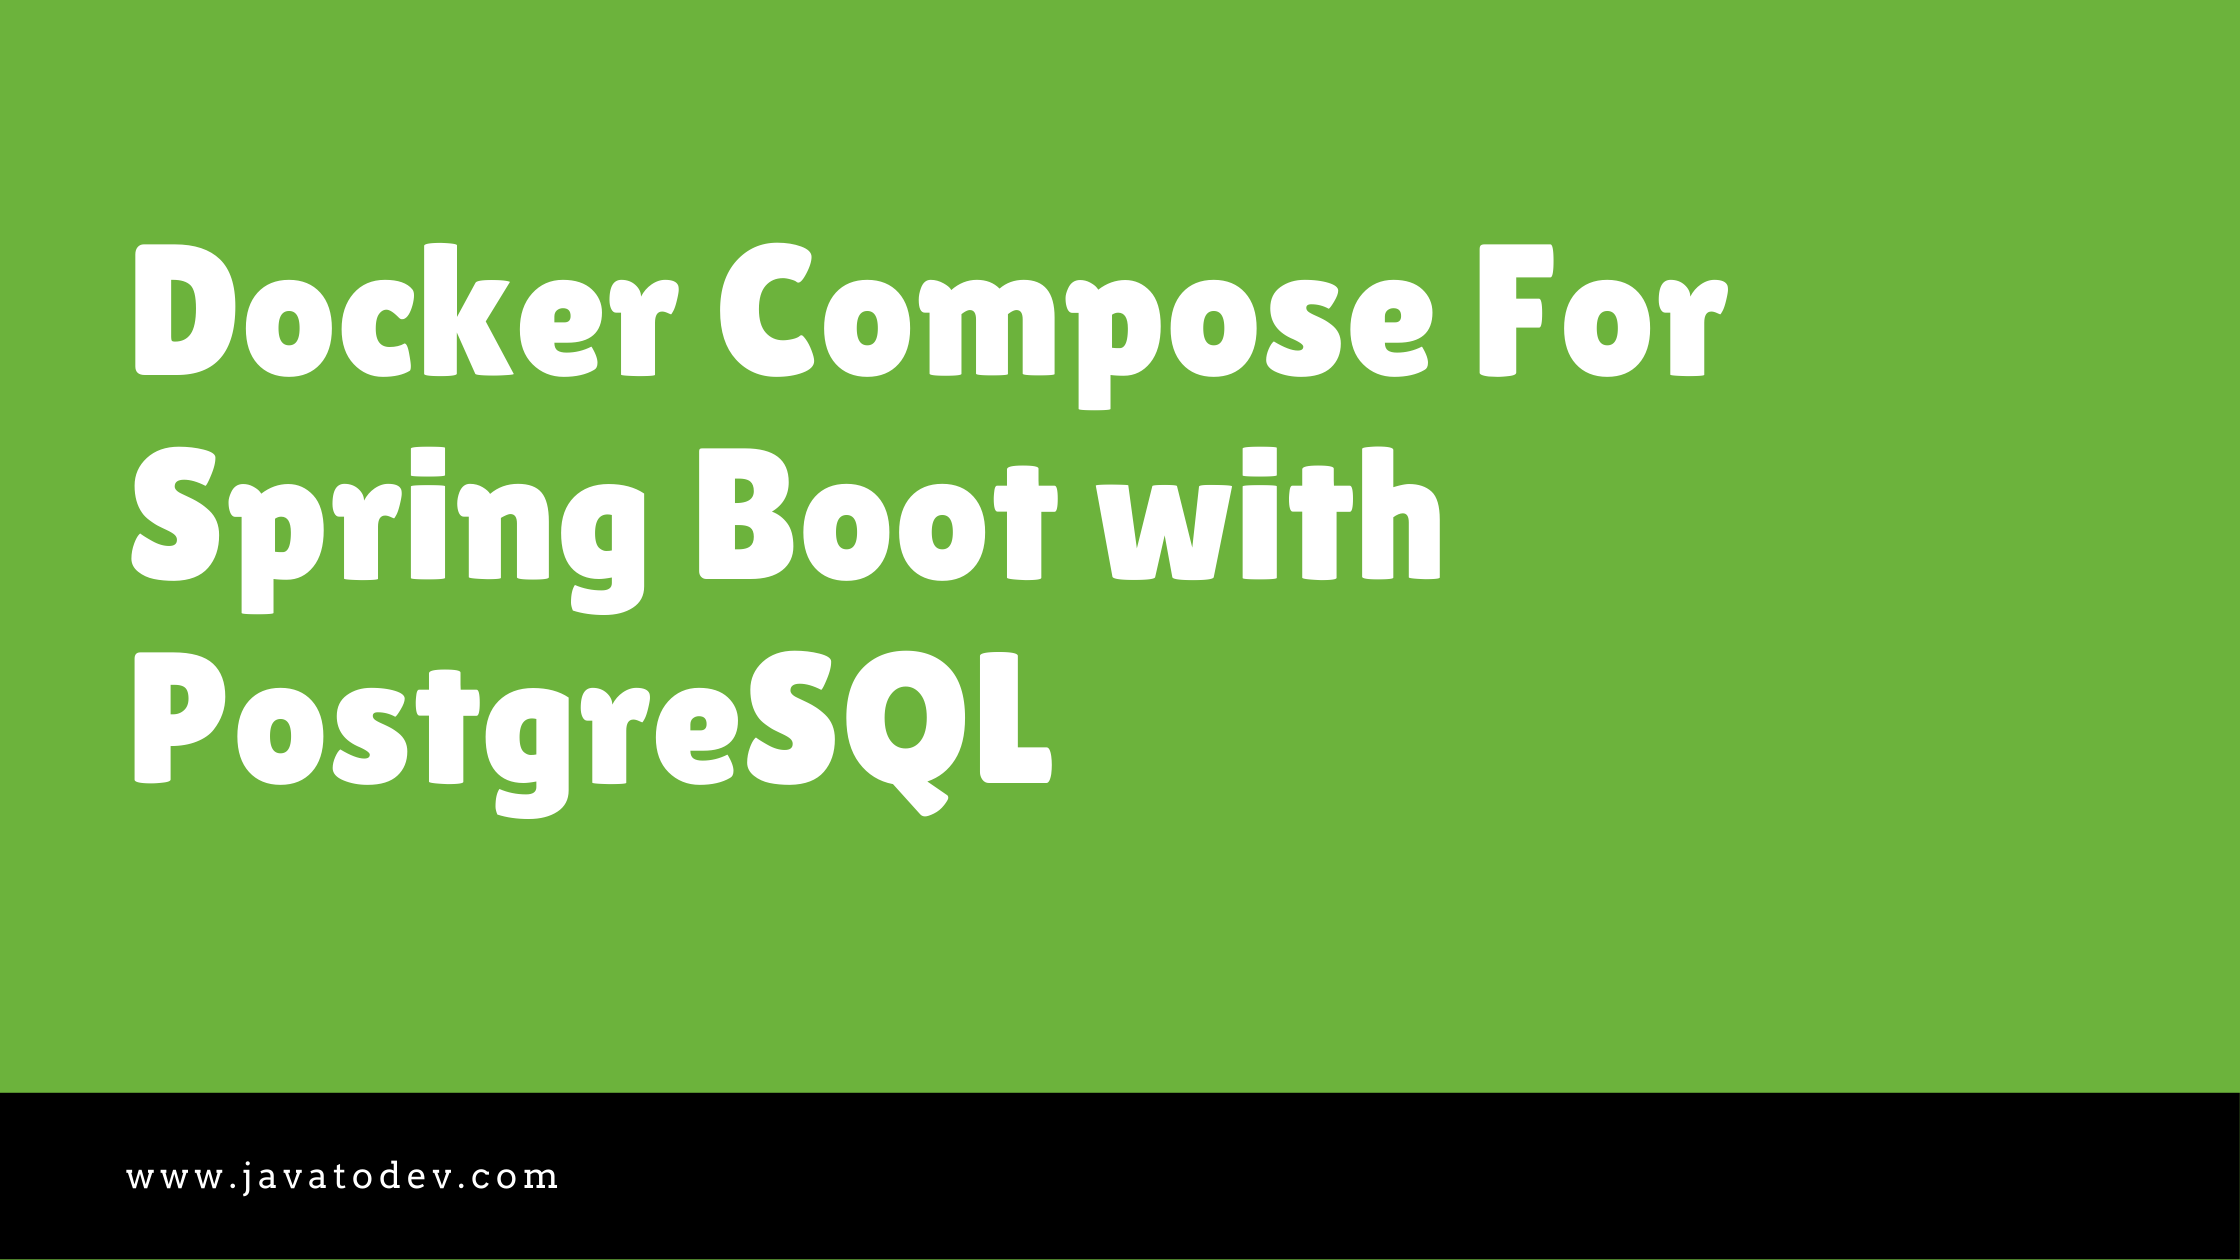 Docker Compose For Spring Boot with PostgreSQL